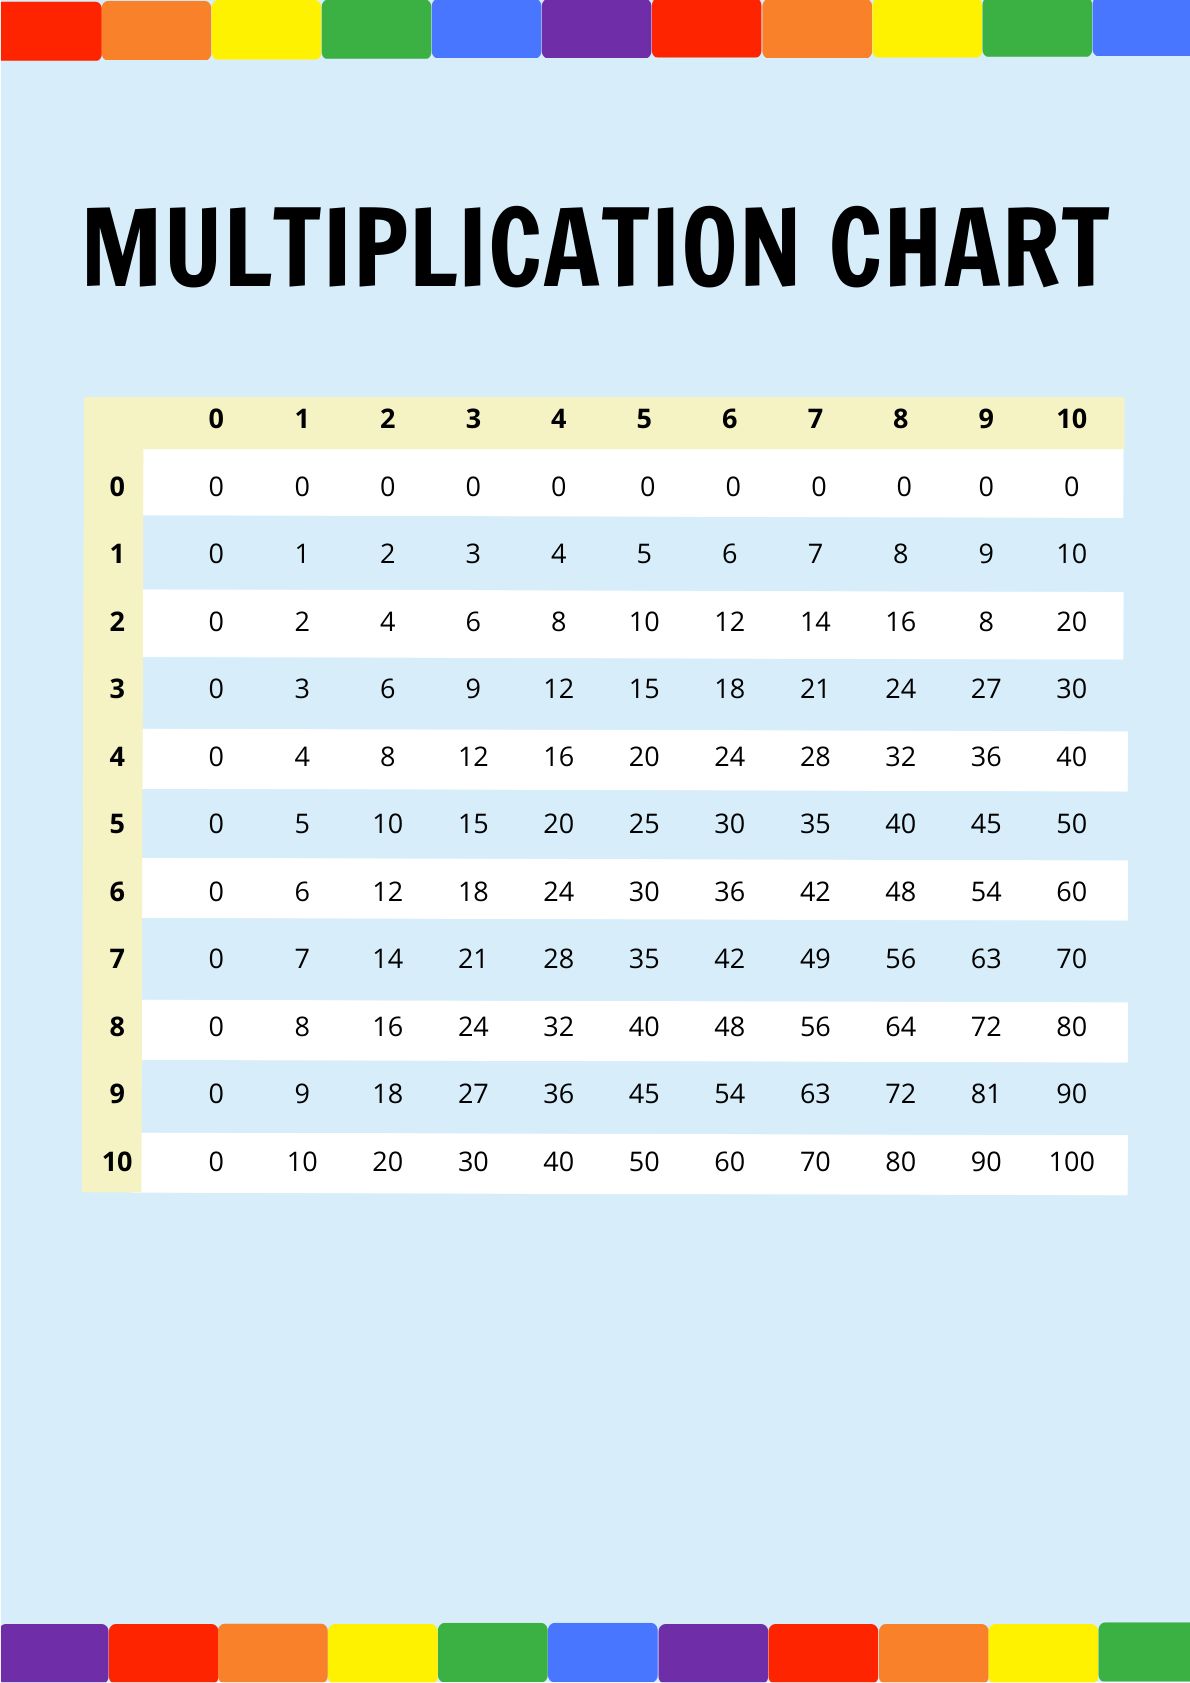 Rainbow Multiplication Chart in PDF, Illustrator